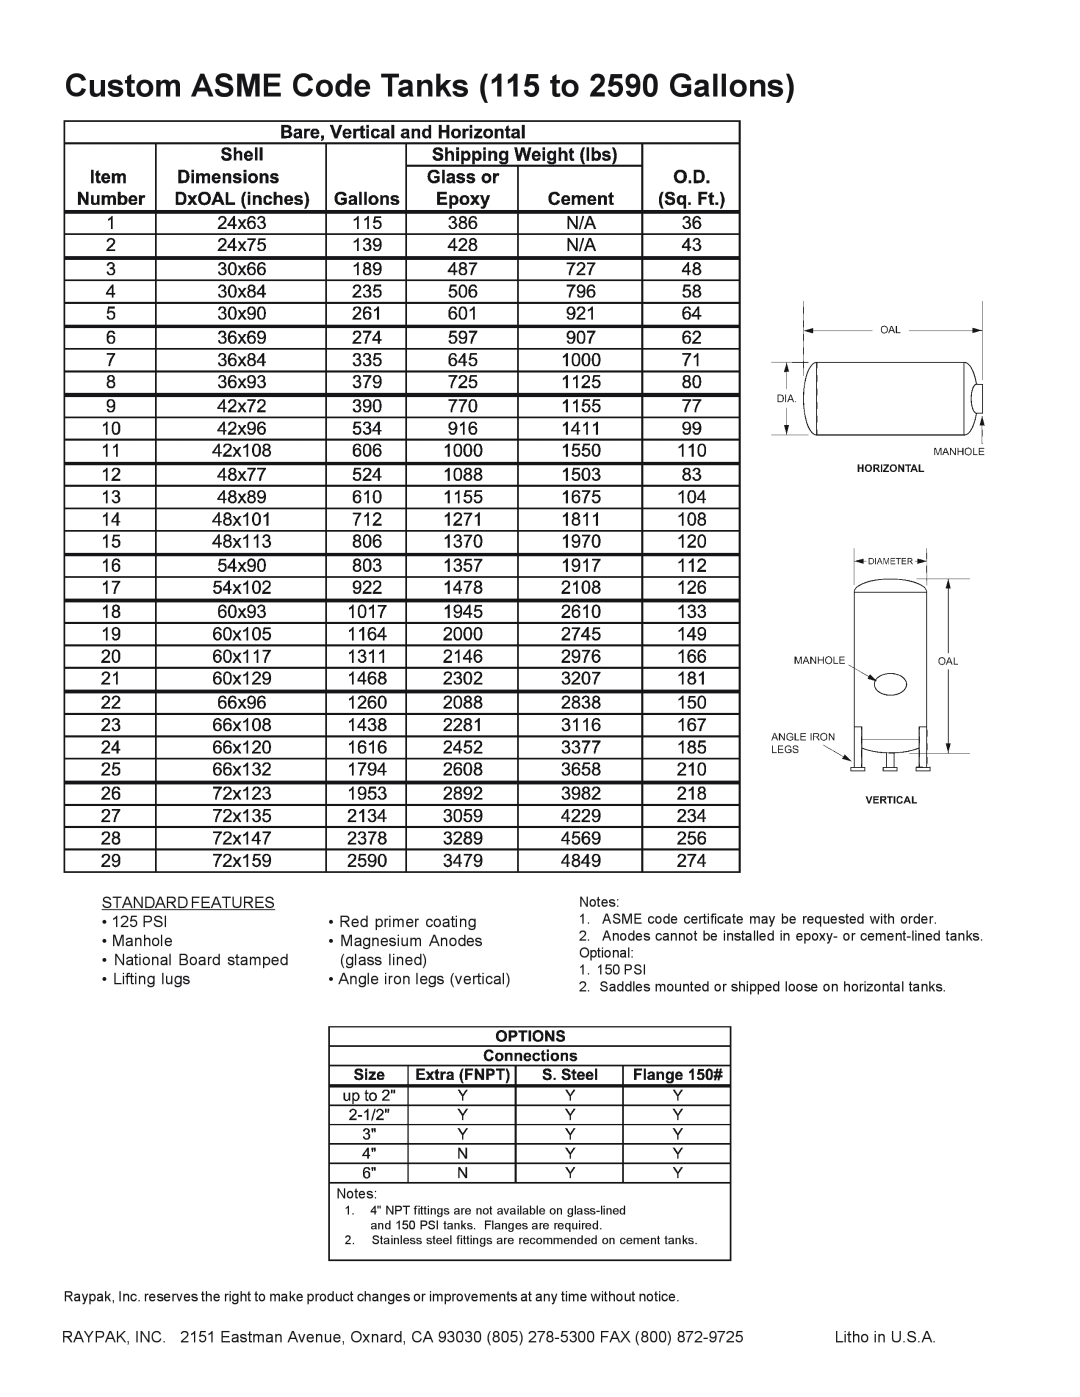 Raypak 115 To 2590 Gallons manual Custom ASME Code Tanks 115 to 2590 Gallons 